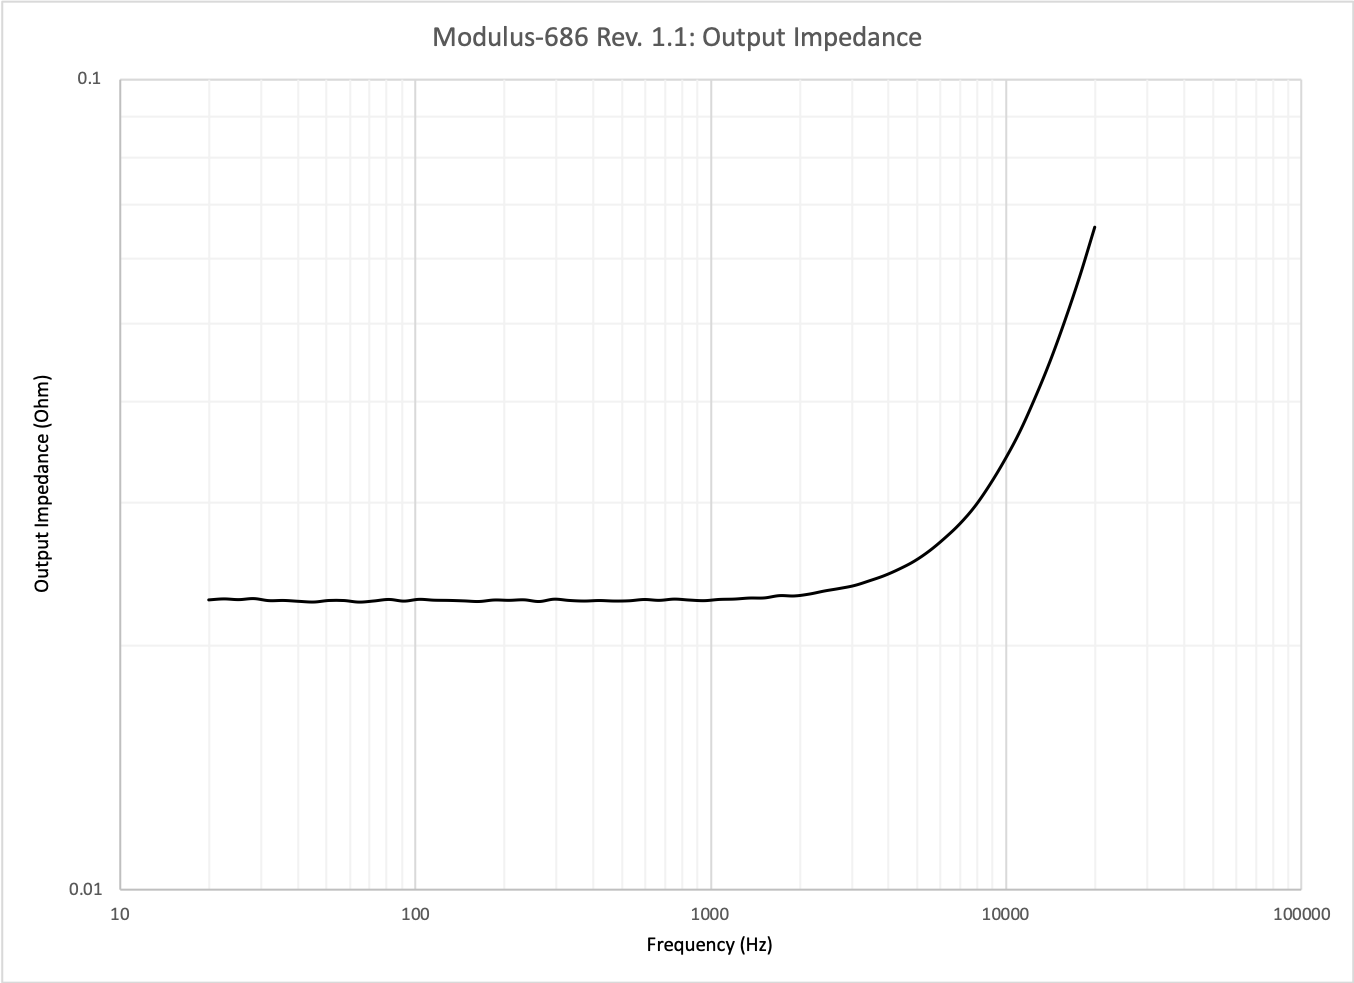 Modulus-686: Output Impedance